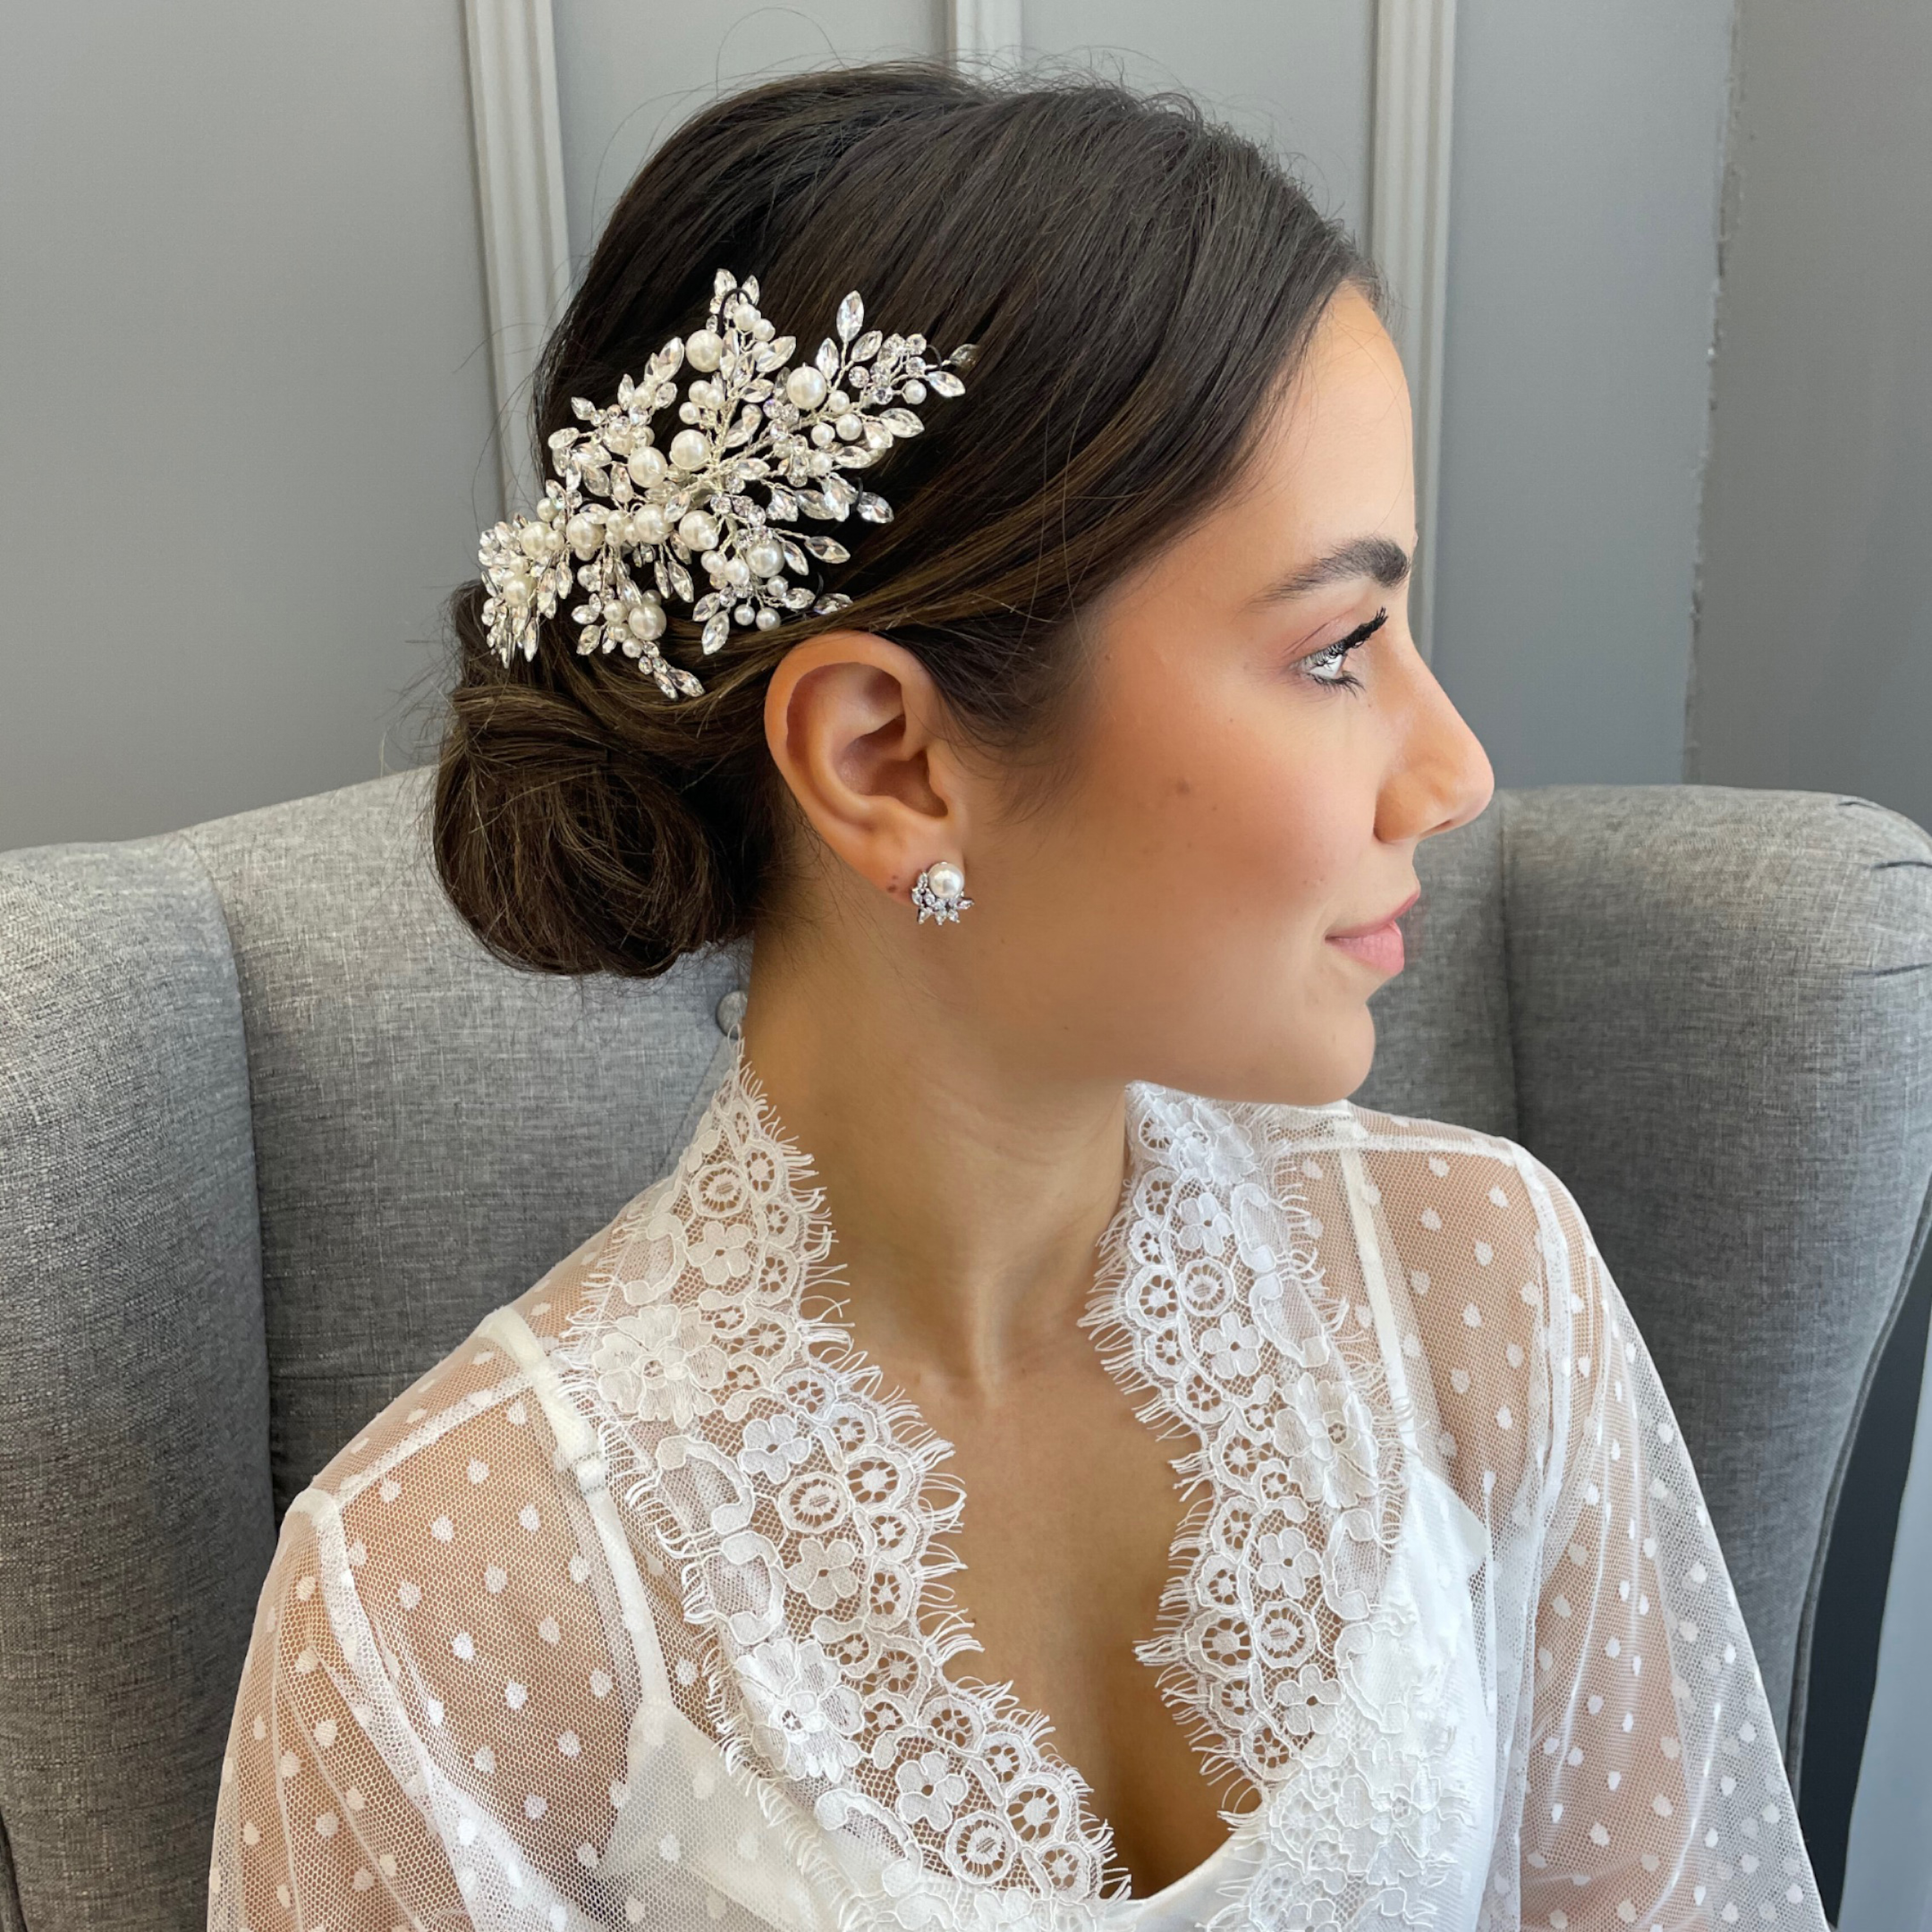 Choosing Bridal Pearl Earrings for Your Wedding Day